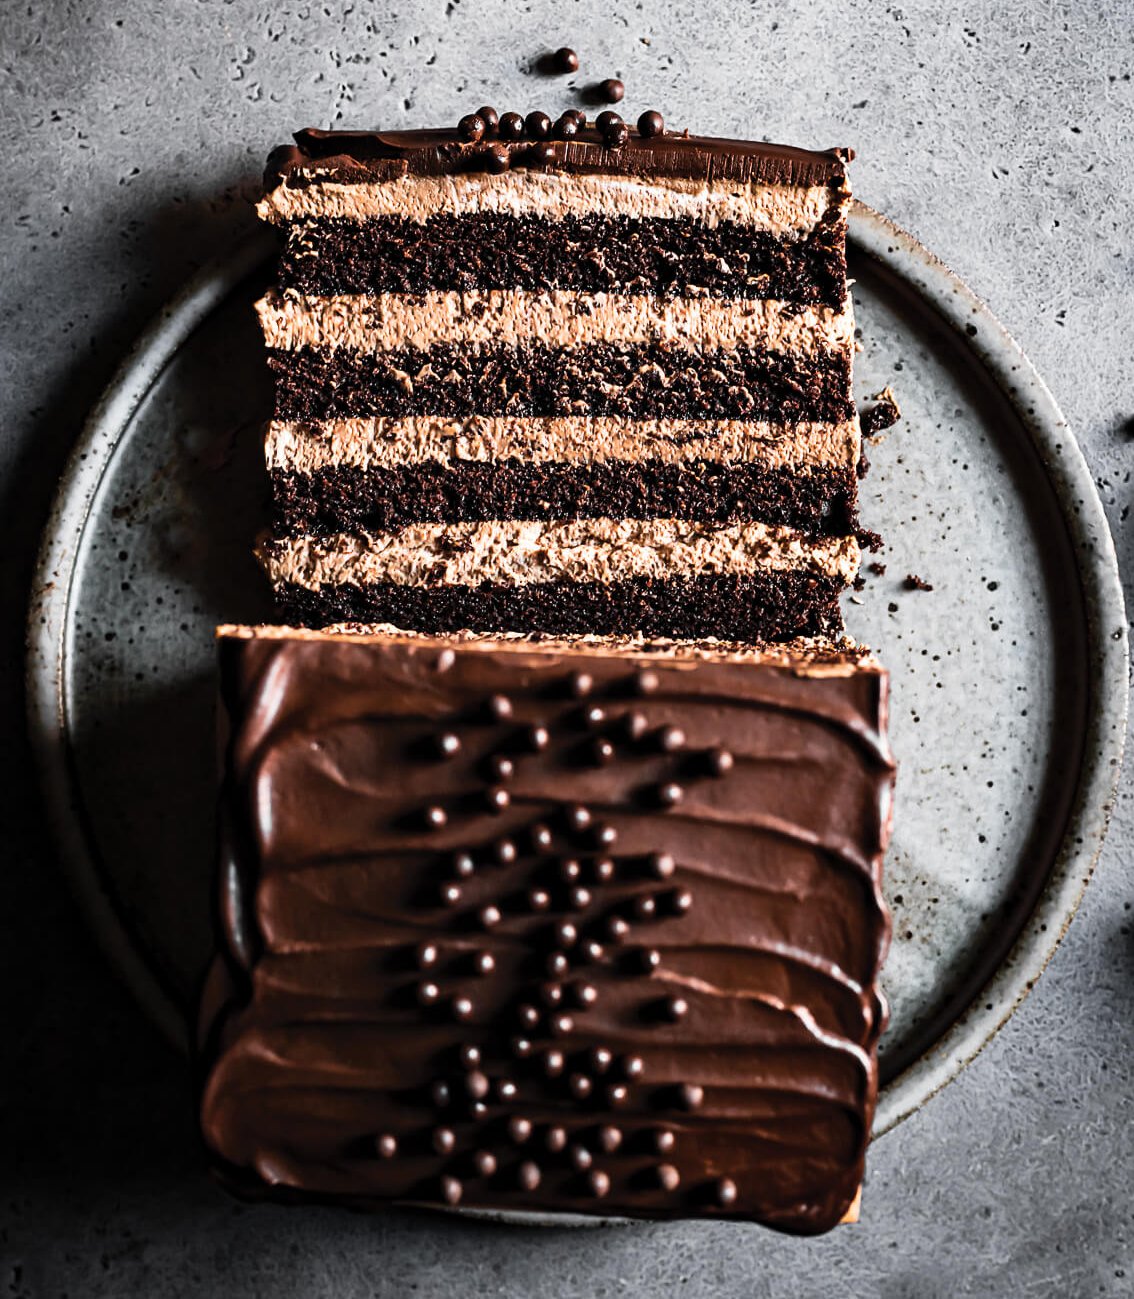 A layered chocolate cake on a grey plate